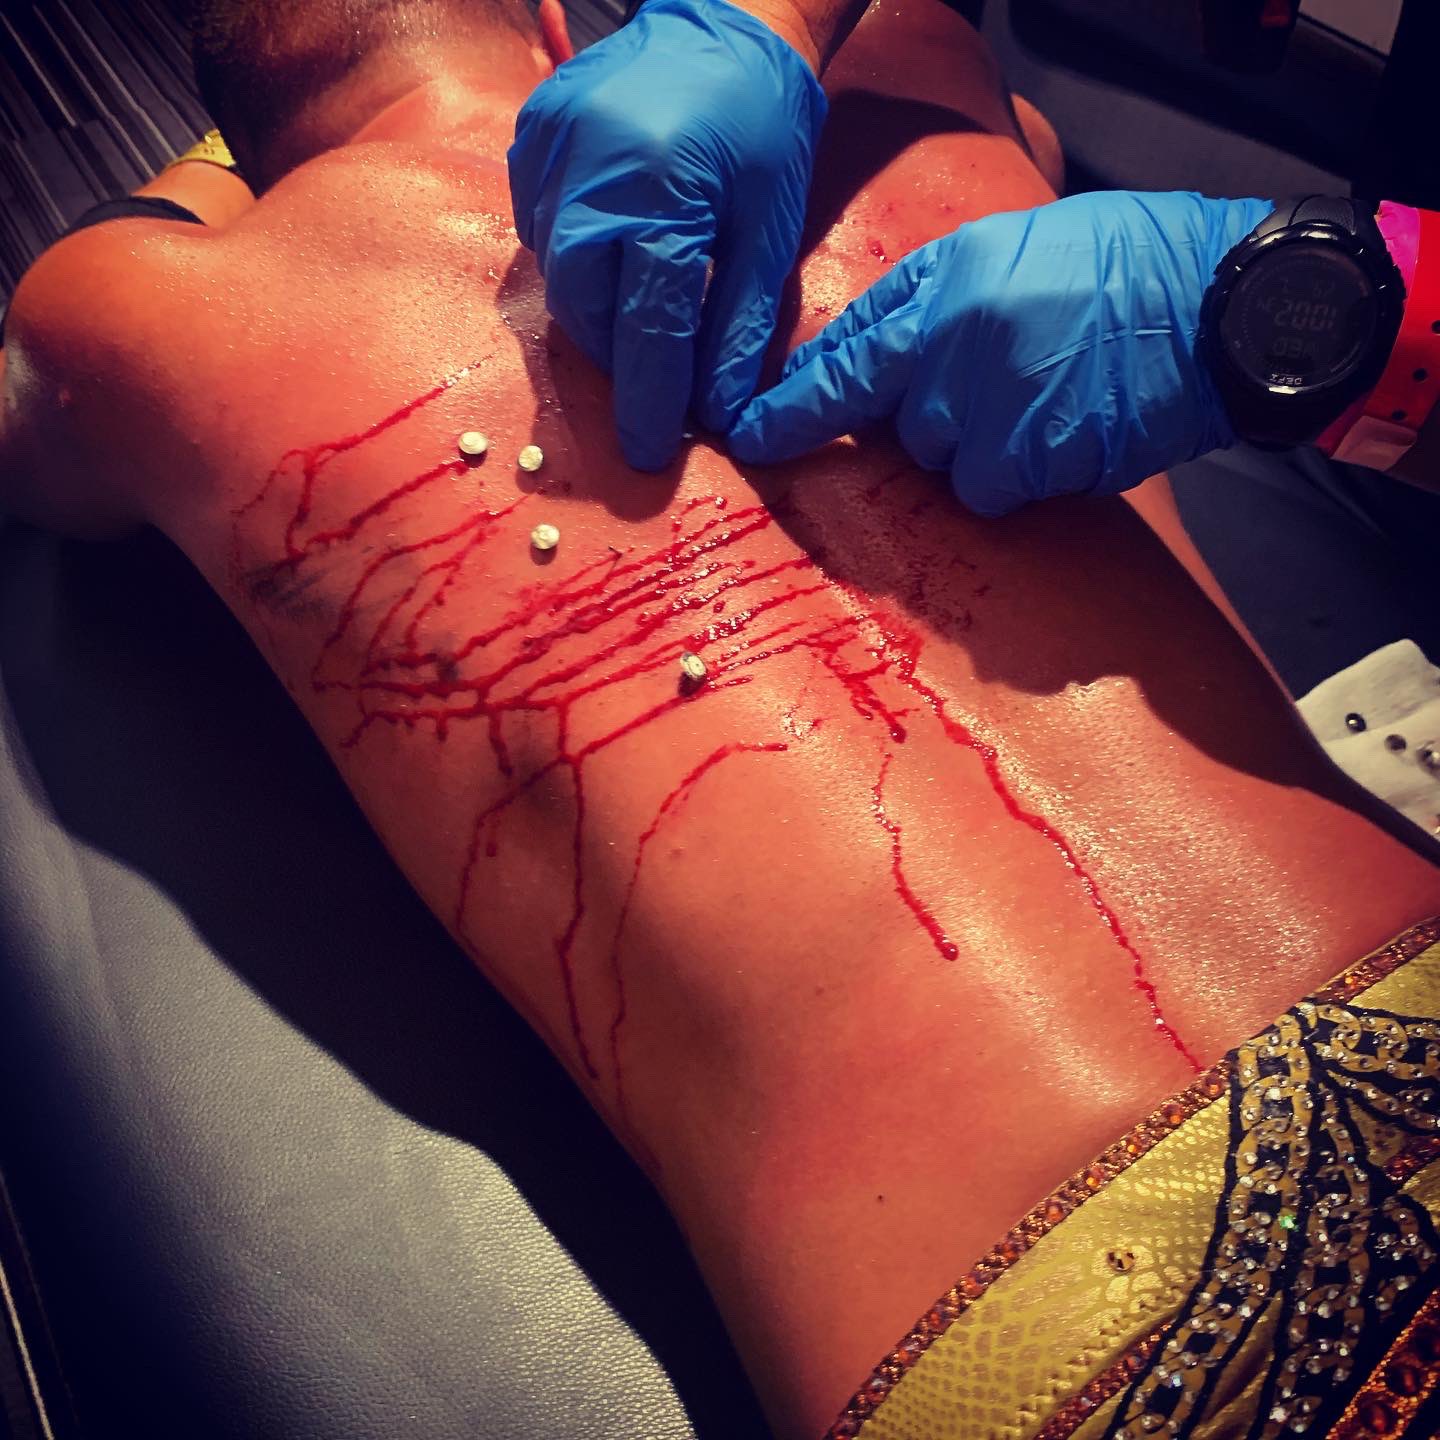 Ricky Starks had a bleeding back on AEW Dynamite this week